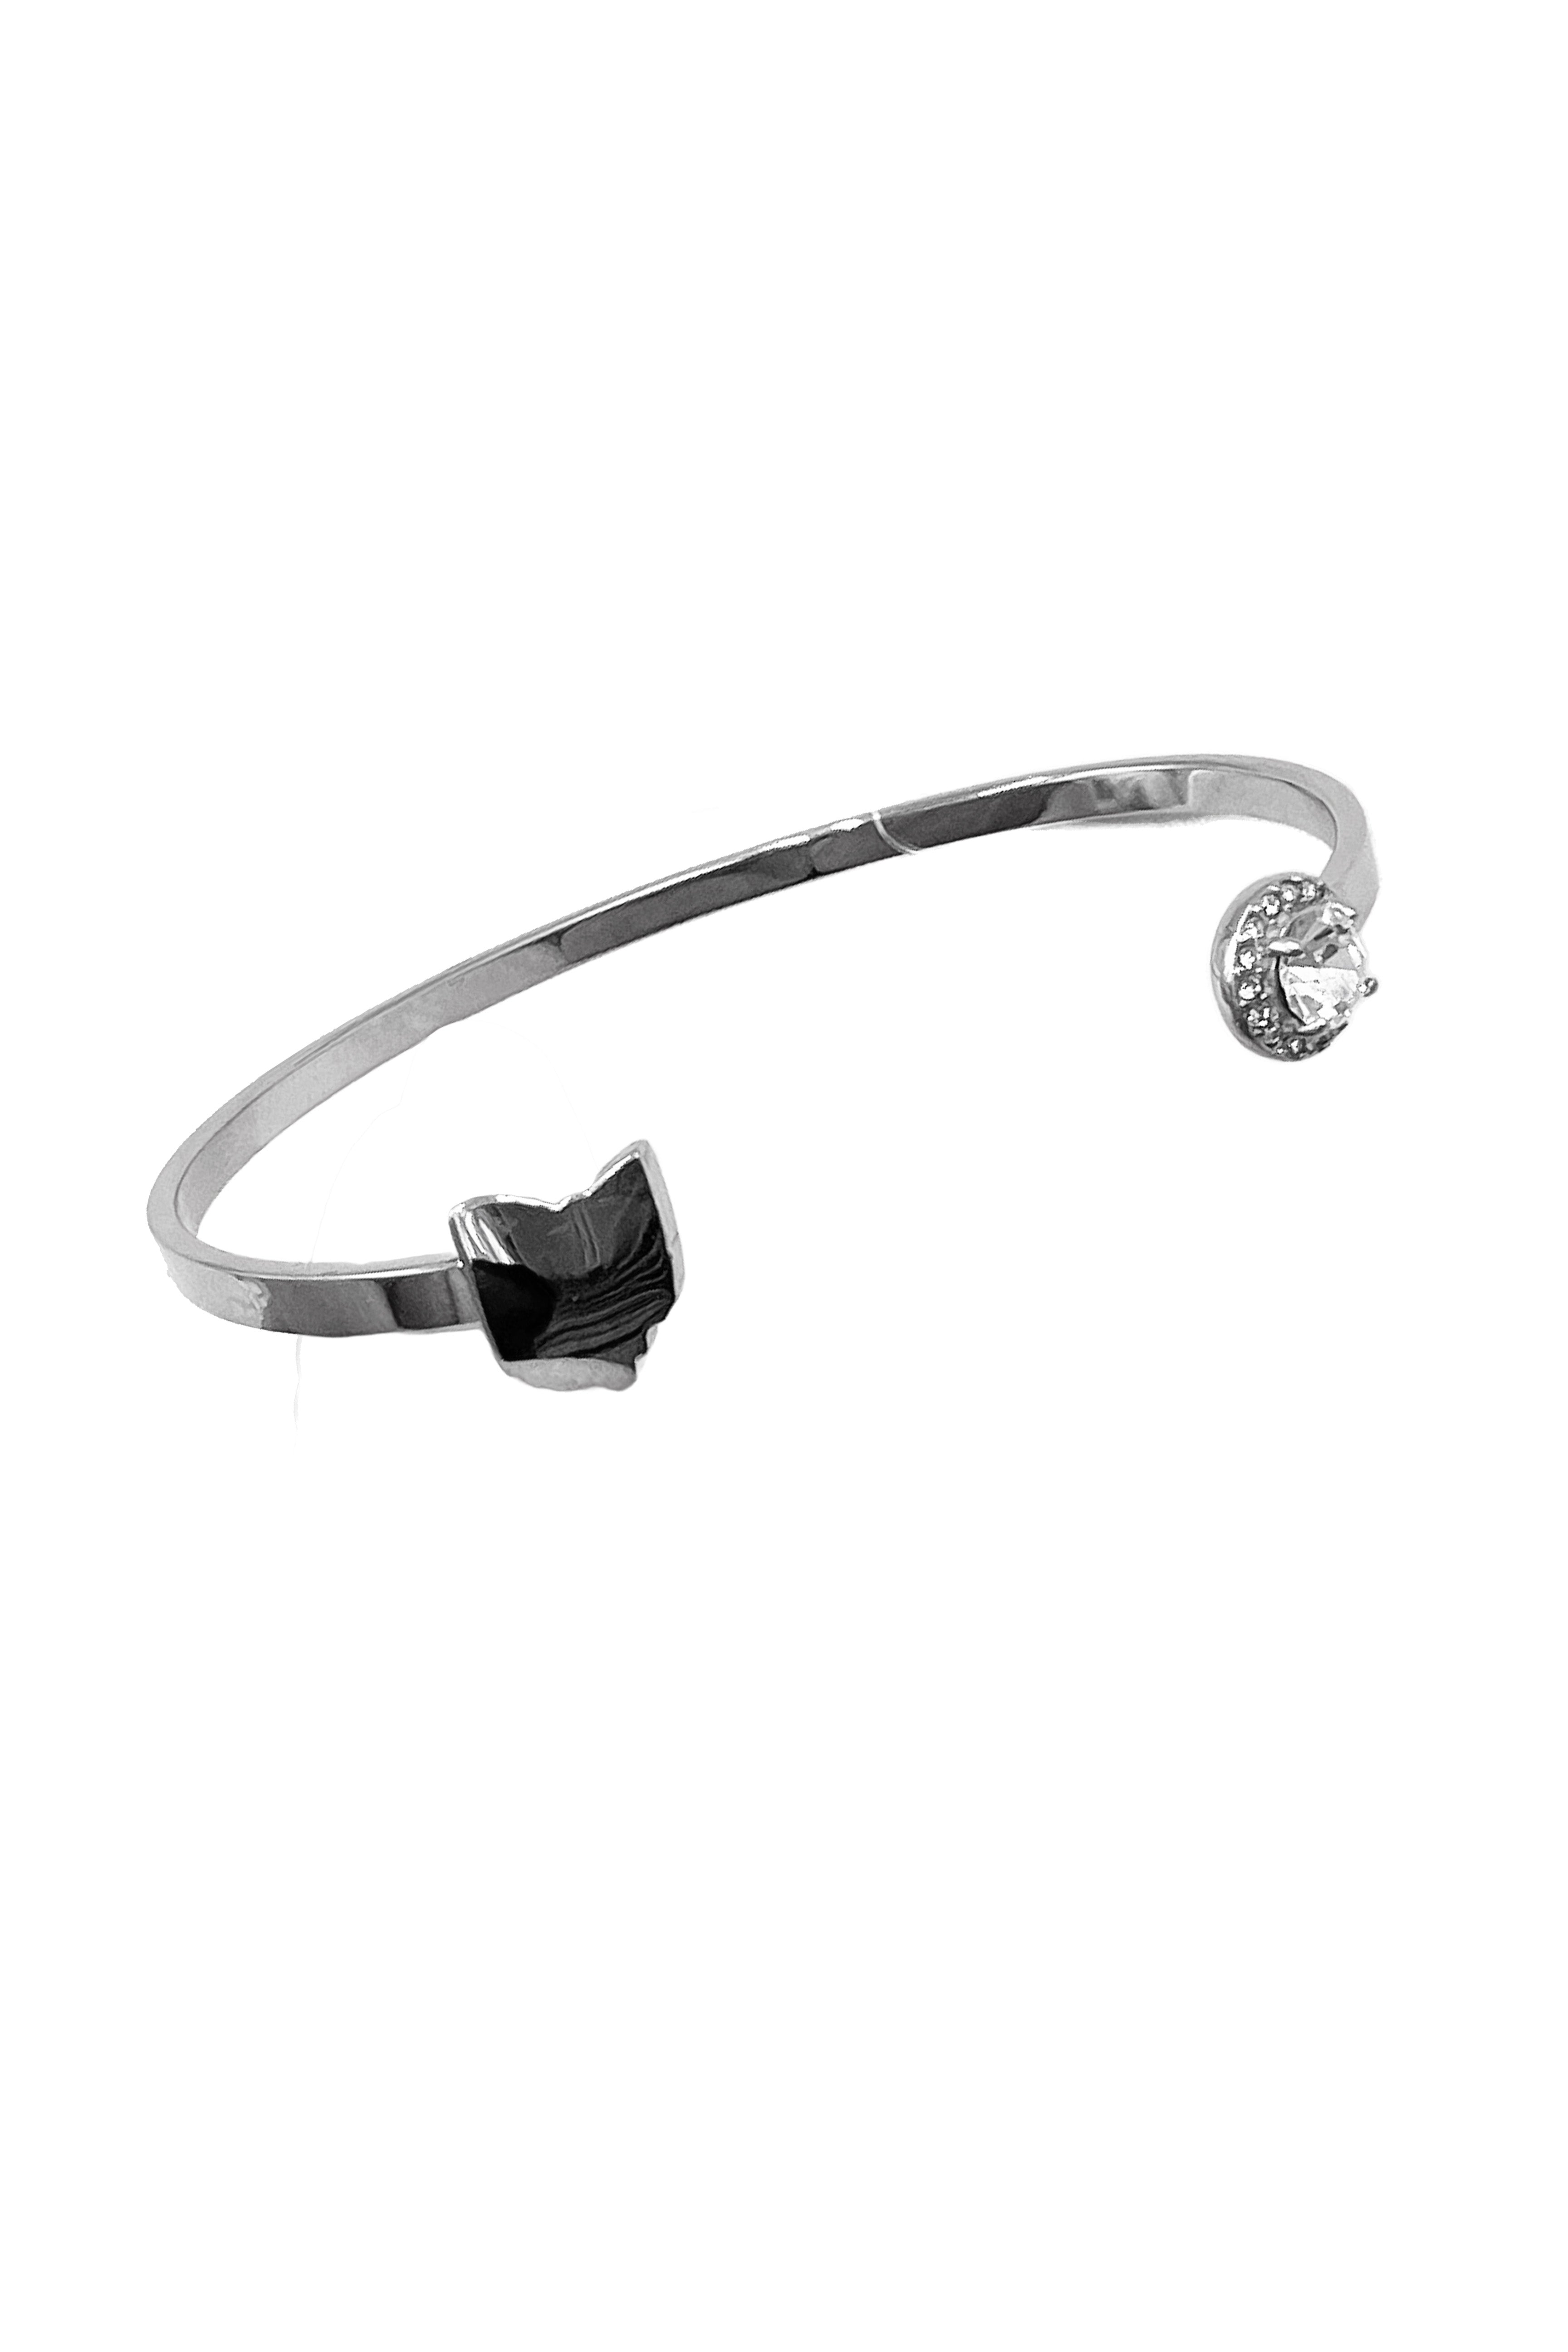 Buy Silver Bracelets & Bangles for Women by Lecalla Online | Ajio.com